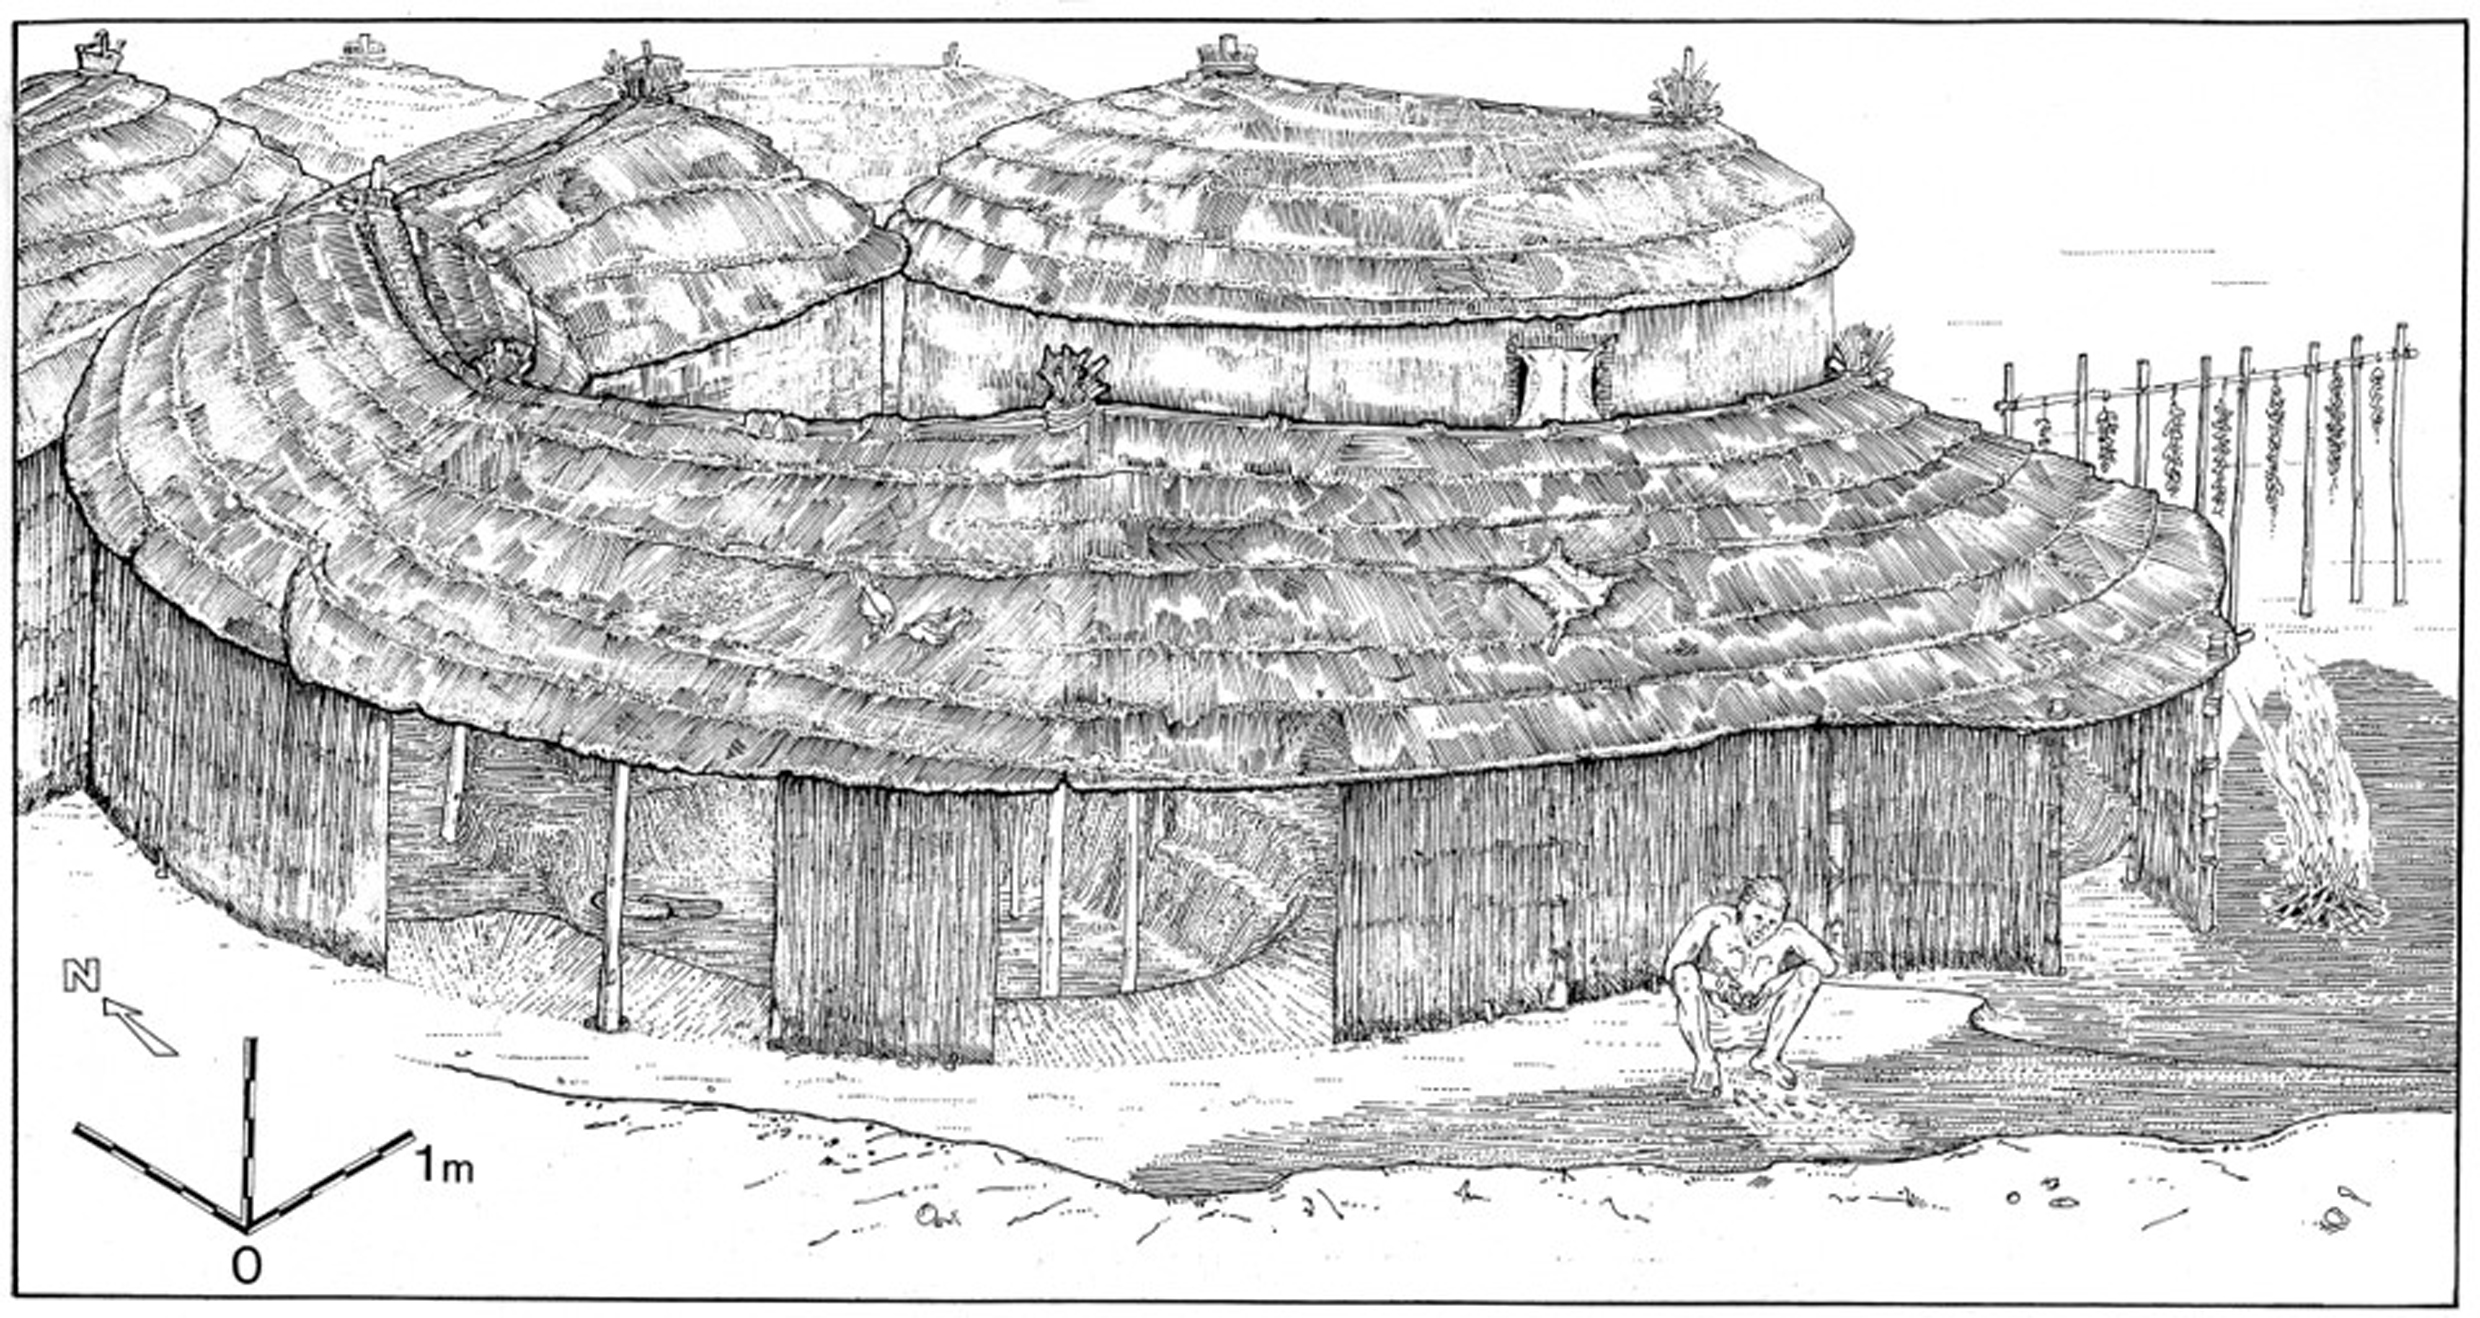 An artist's impression of a hunter-gather hut 